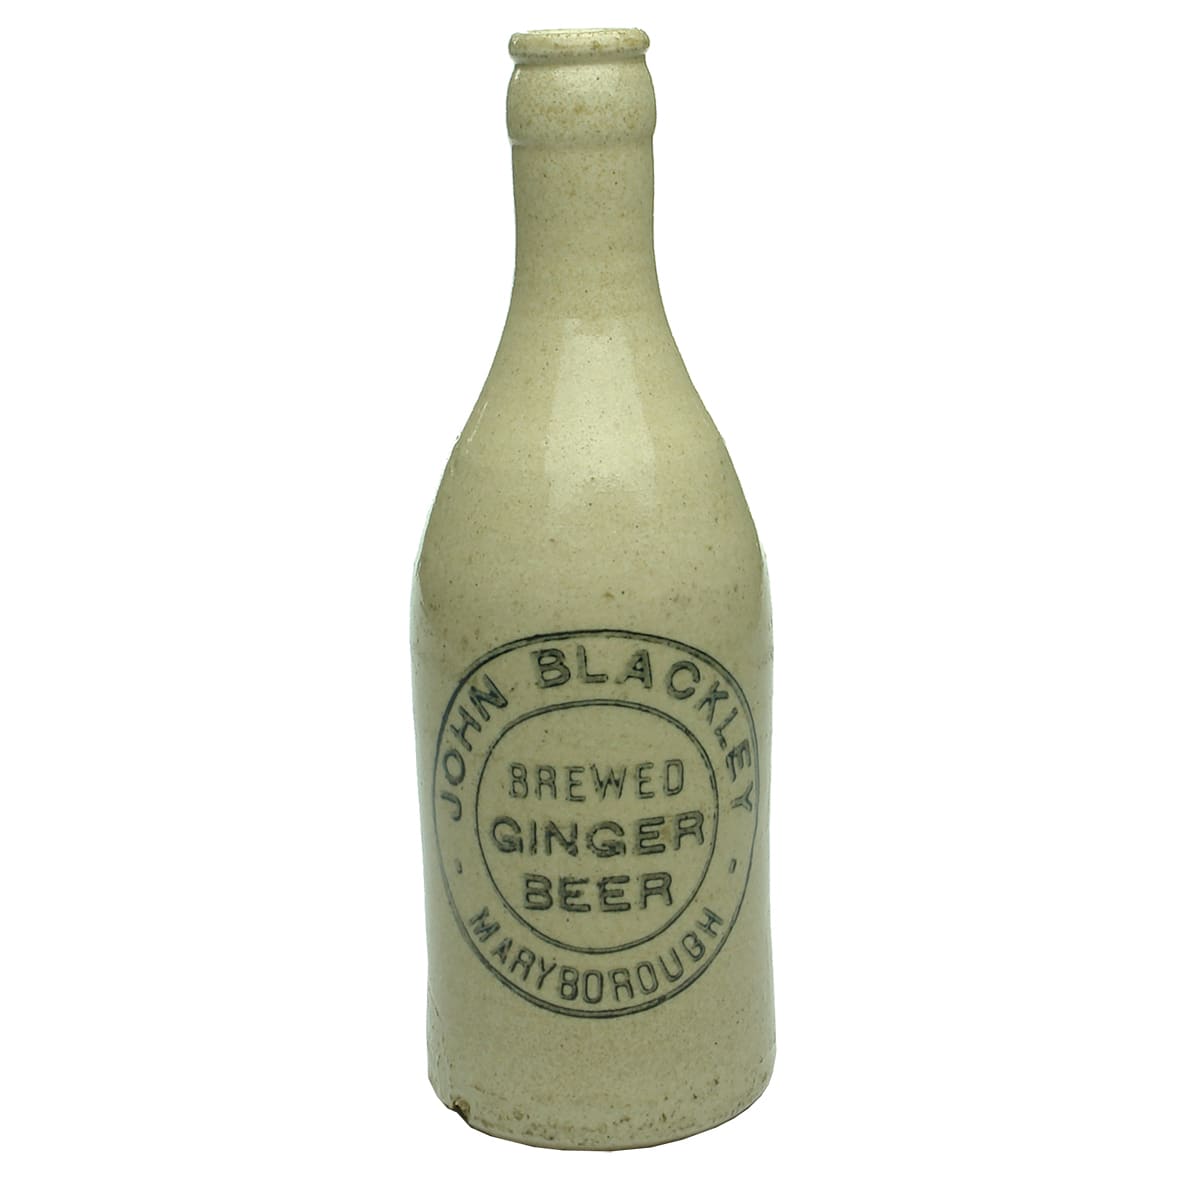 Ginger Beer. John Blackley, Maryborough. Crown seal. Champagne. All white.